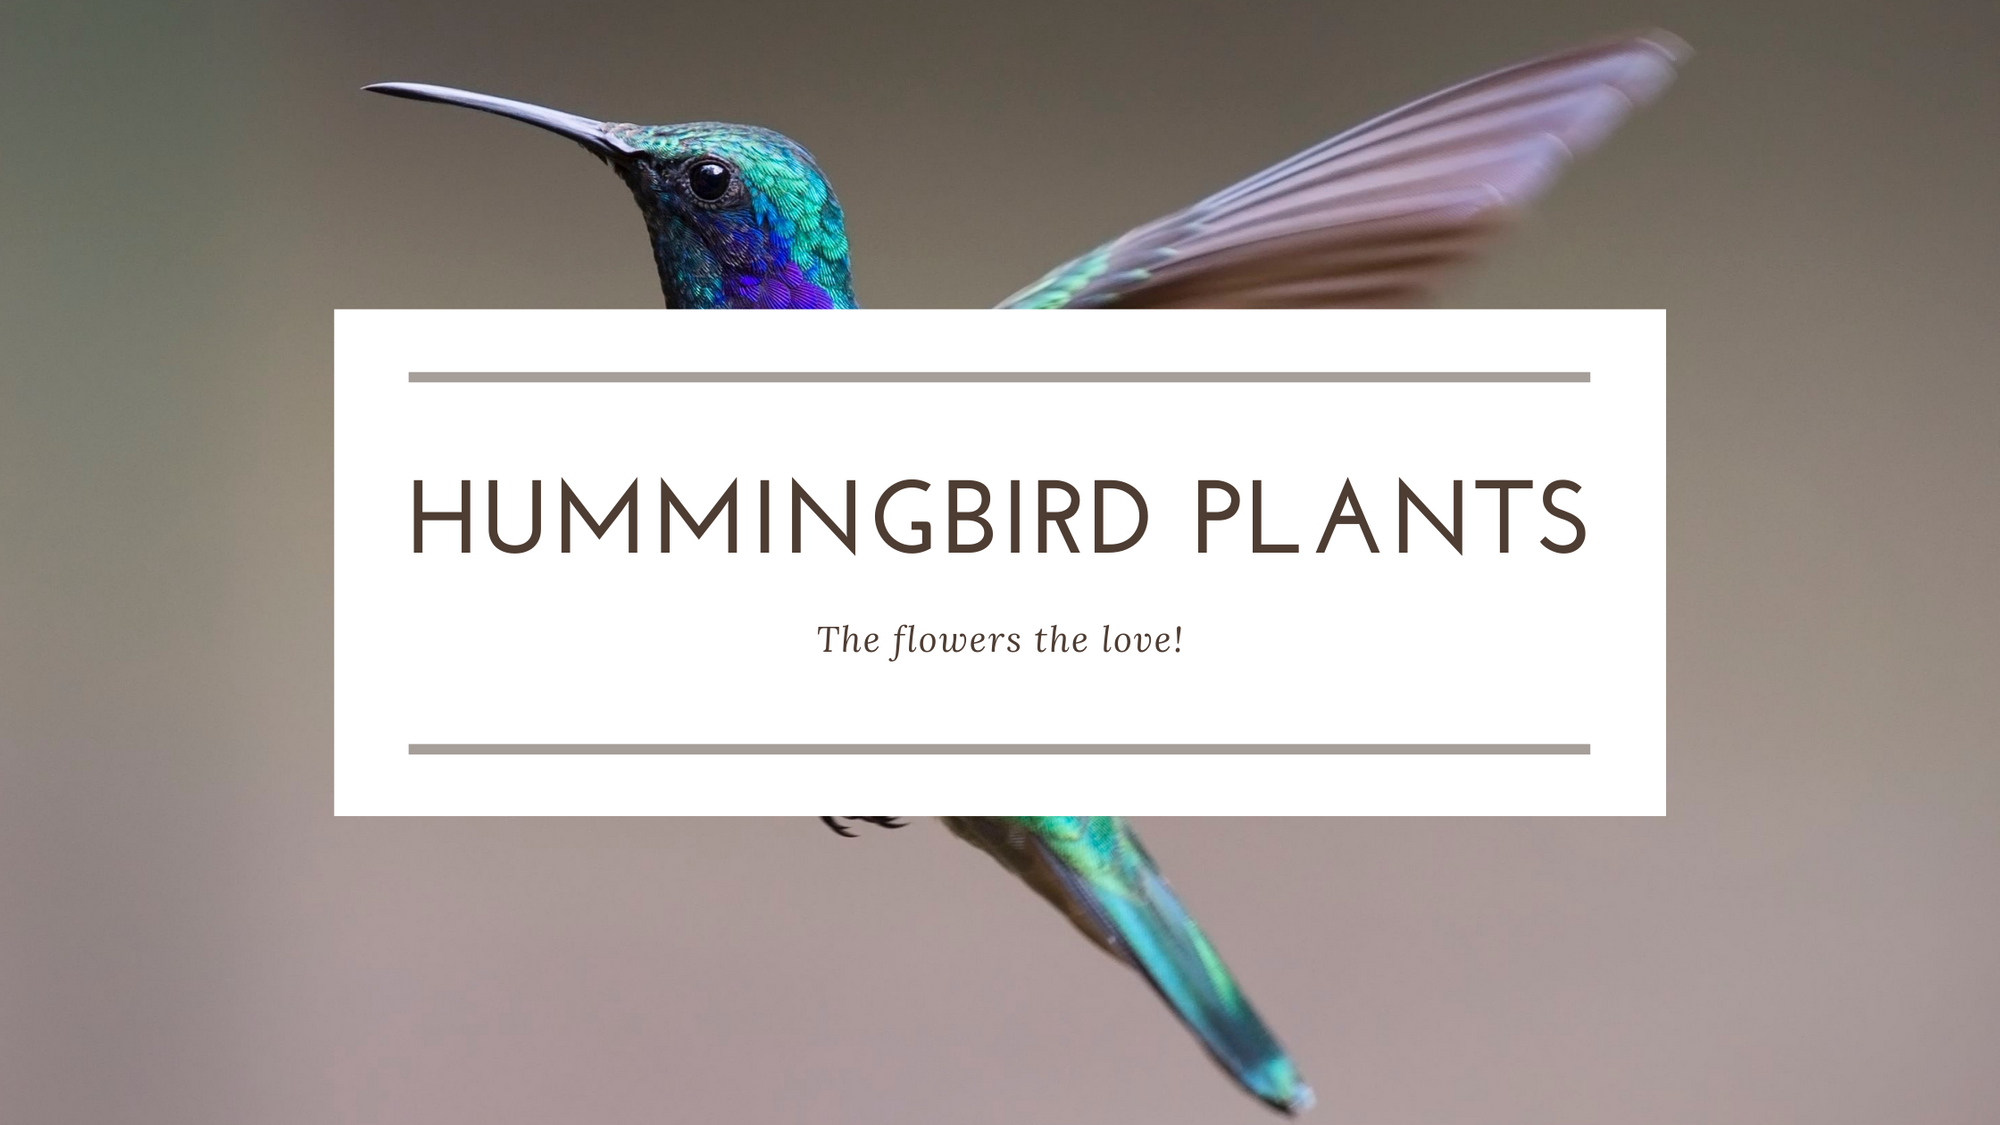 Hummingbird Plants!